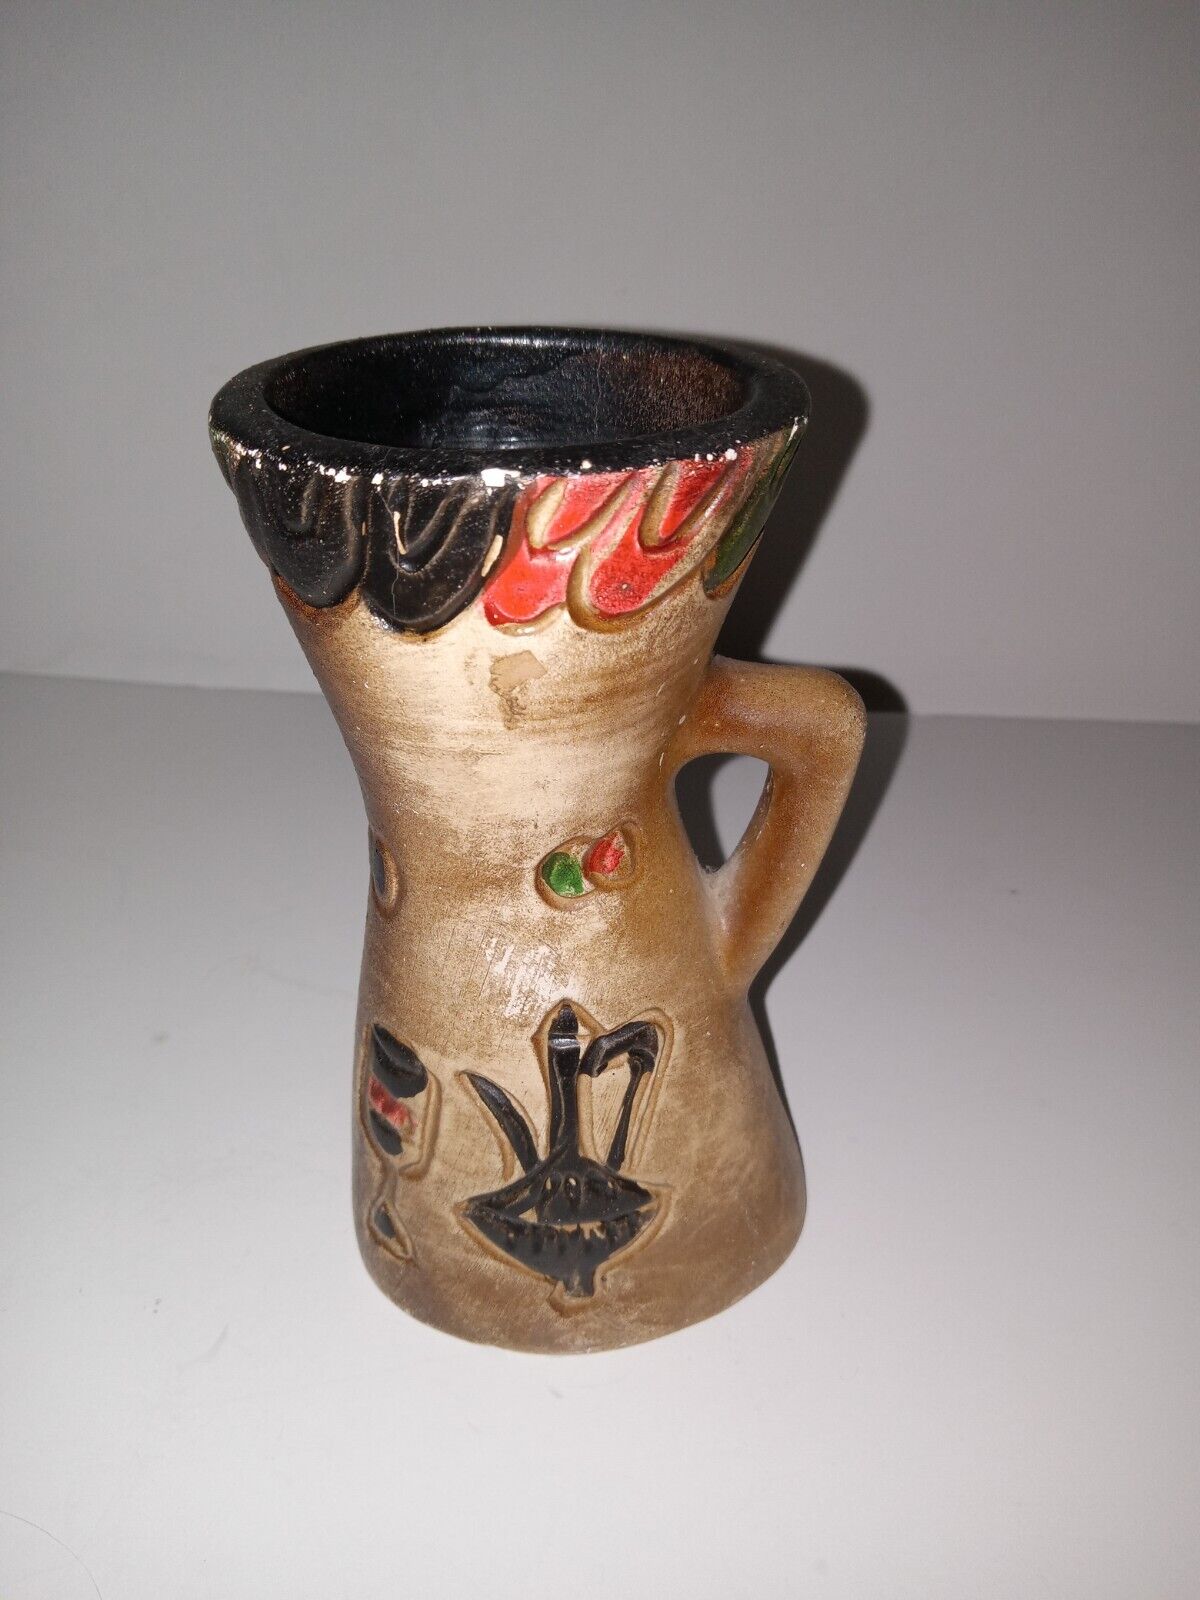 Vintage Souvenir Pottery Mug Vase from the 1950s 1960s Retro